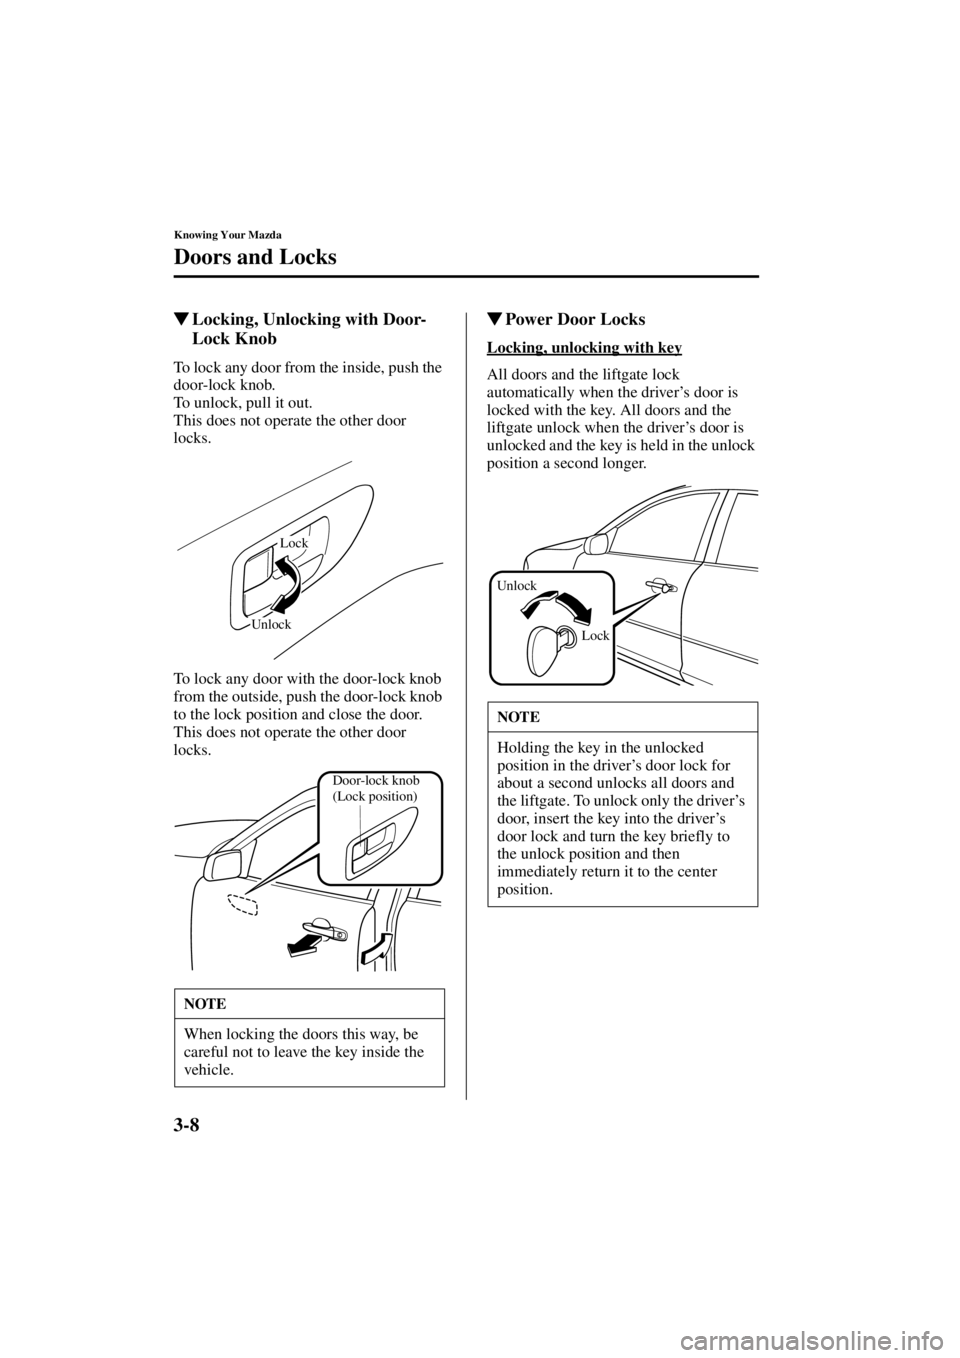 MAZDA MODEL 3 5-DOOR 2004 Manual PDF 3-8
Knowing Your Mazda
Doors and Locks
Form No. 8S18-EA-03I
Locking, Unlocking with Door-
Lock Knob
To lock any door from the inside, push the 
door-lock knob.
To unlock, pull it out.
This does not o